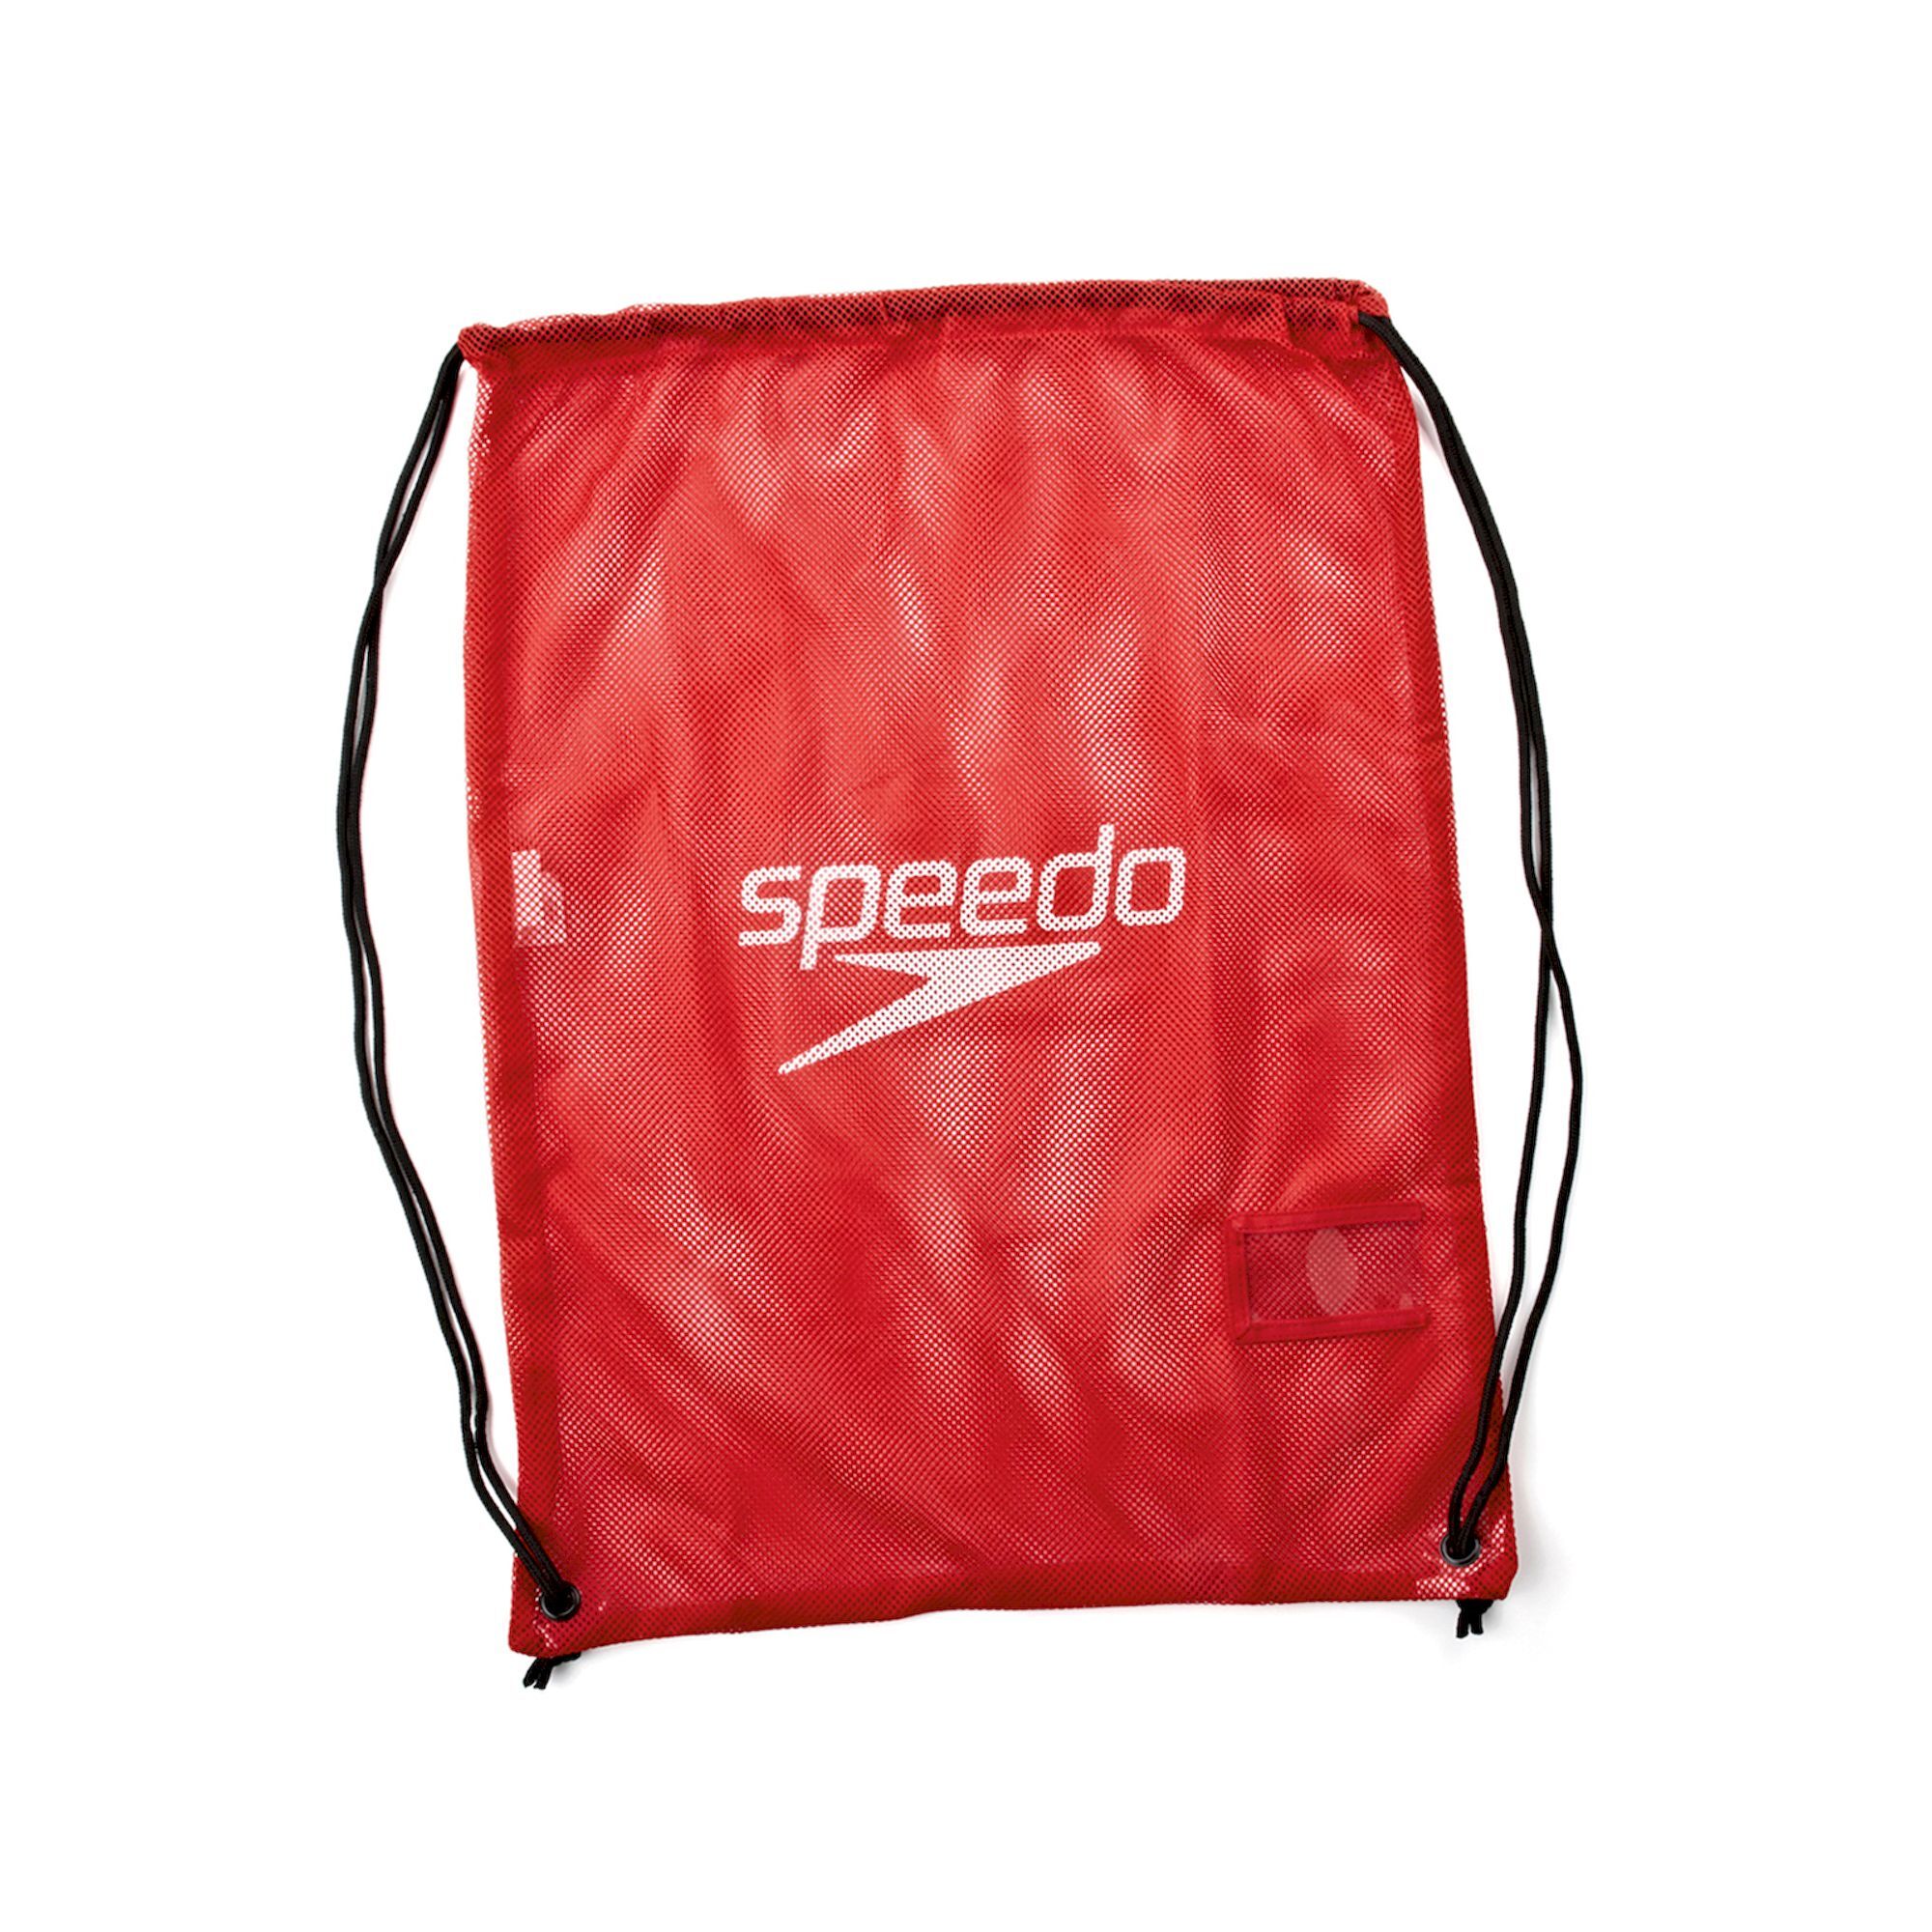 Speedo Equipment Mesh Bag - Plaveckà taška | Hardloop